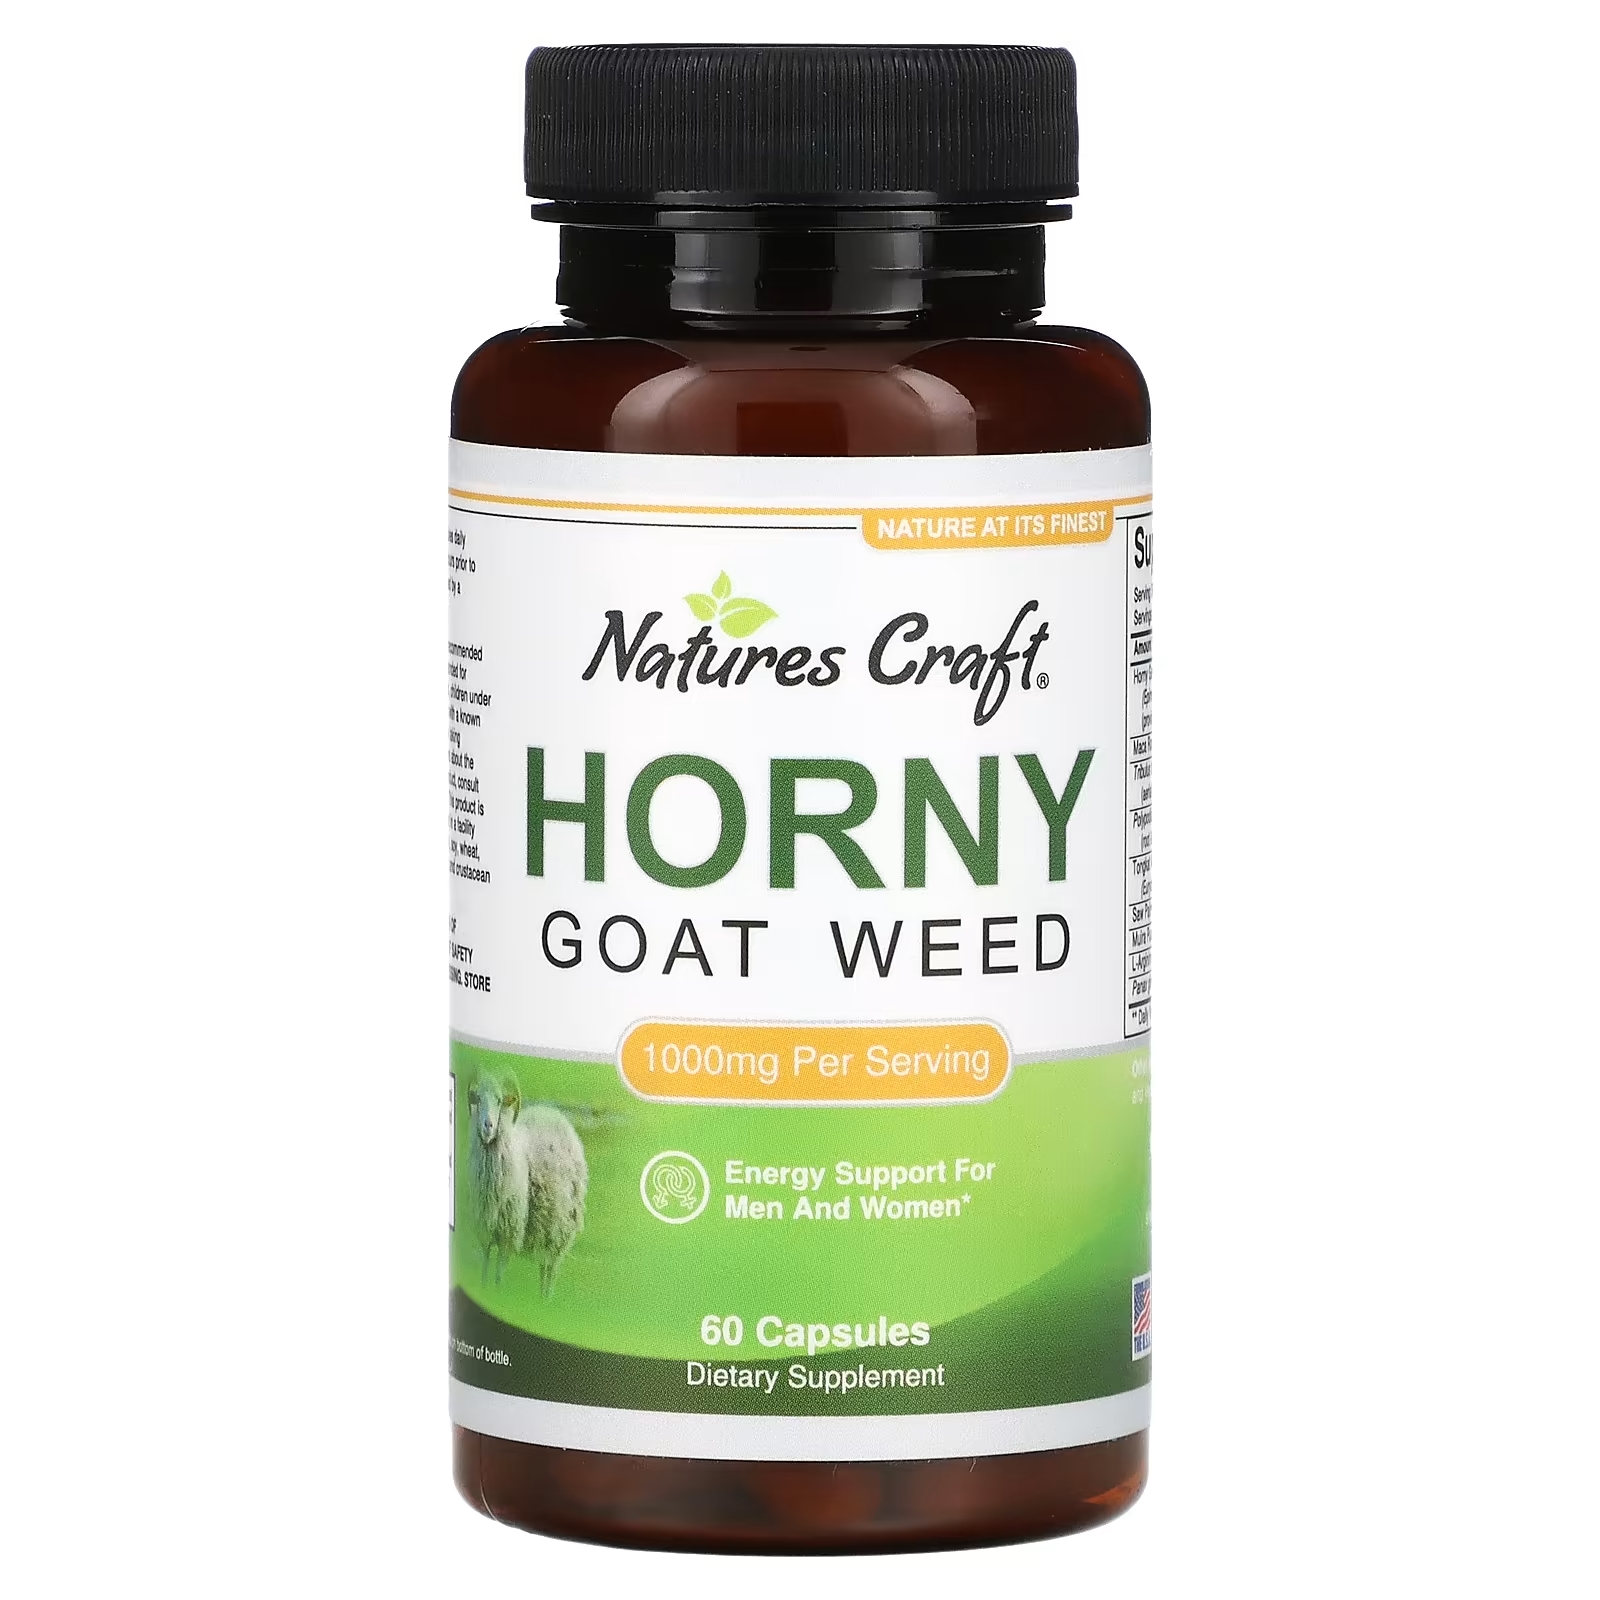 Пищевая добавка Natures Craft Horny Goat Weed, 60 капсул расширенный комплекс nature s craft horny goat weed 20 капсул